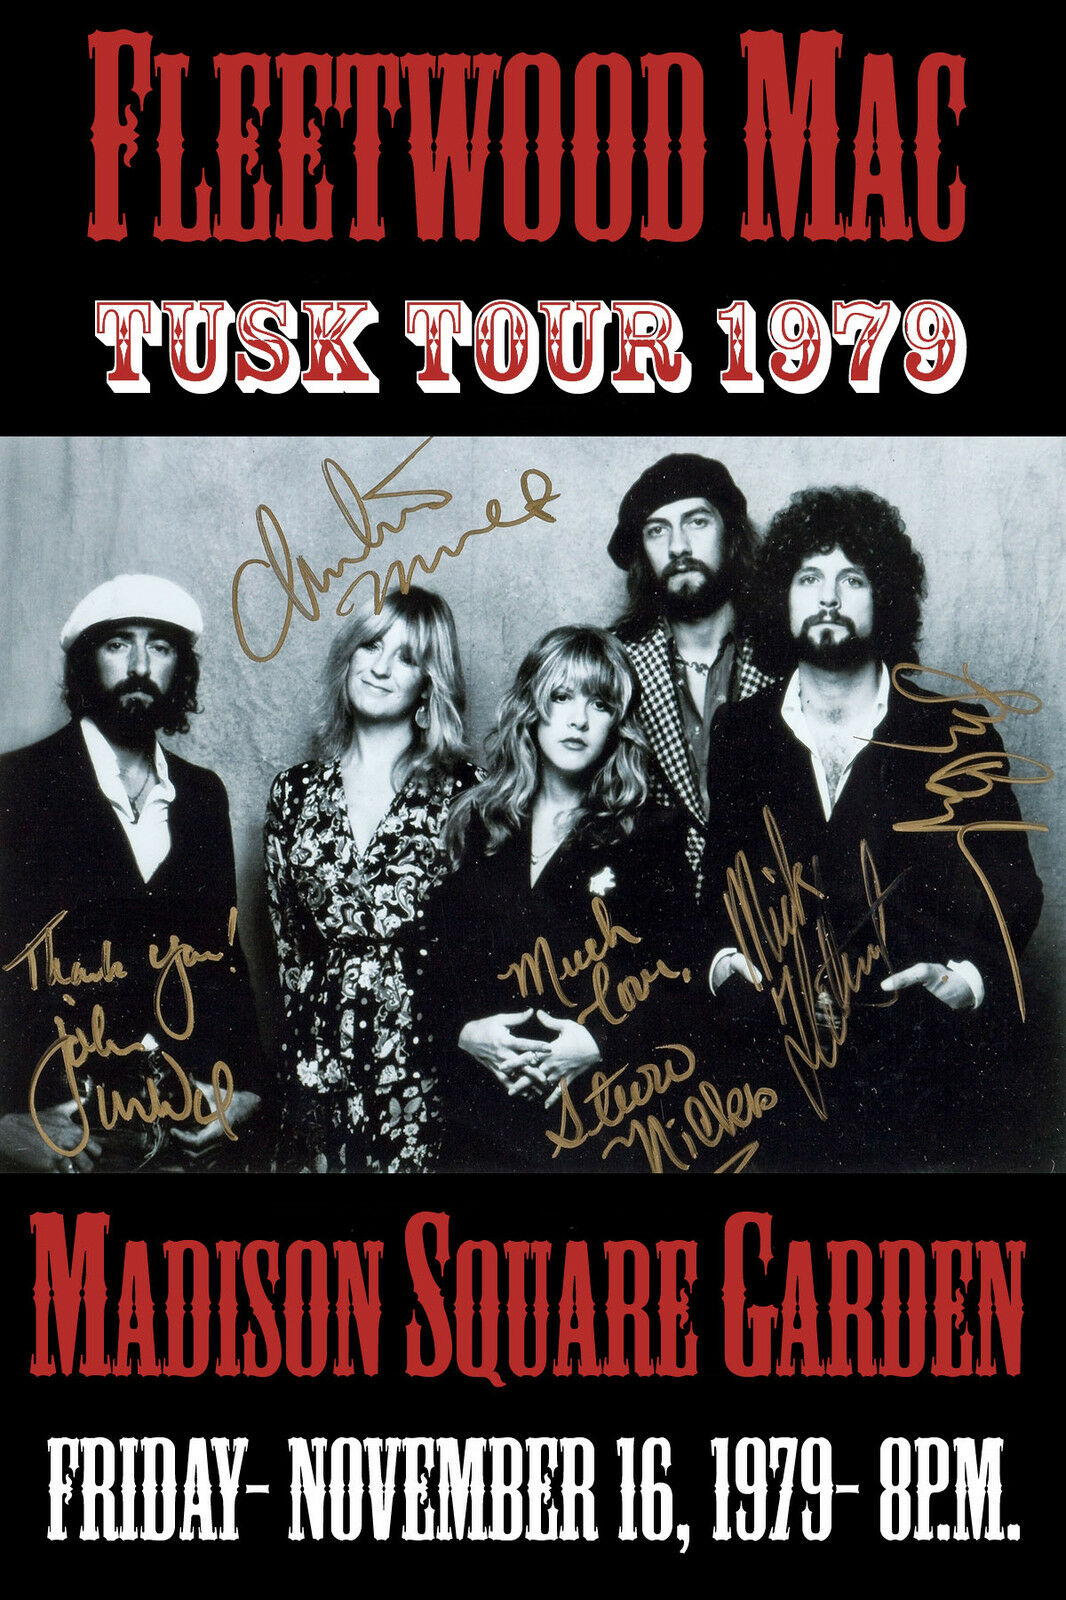 Fleetwood Mac At Madison Square Garden Concert Poster * Tusk Tour * 1979  12x18